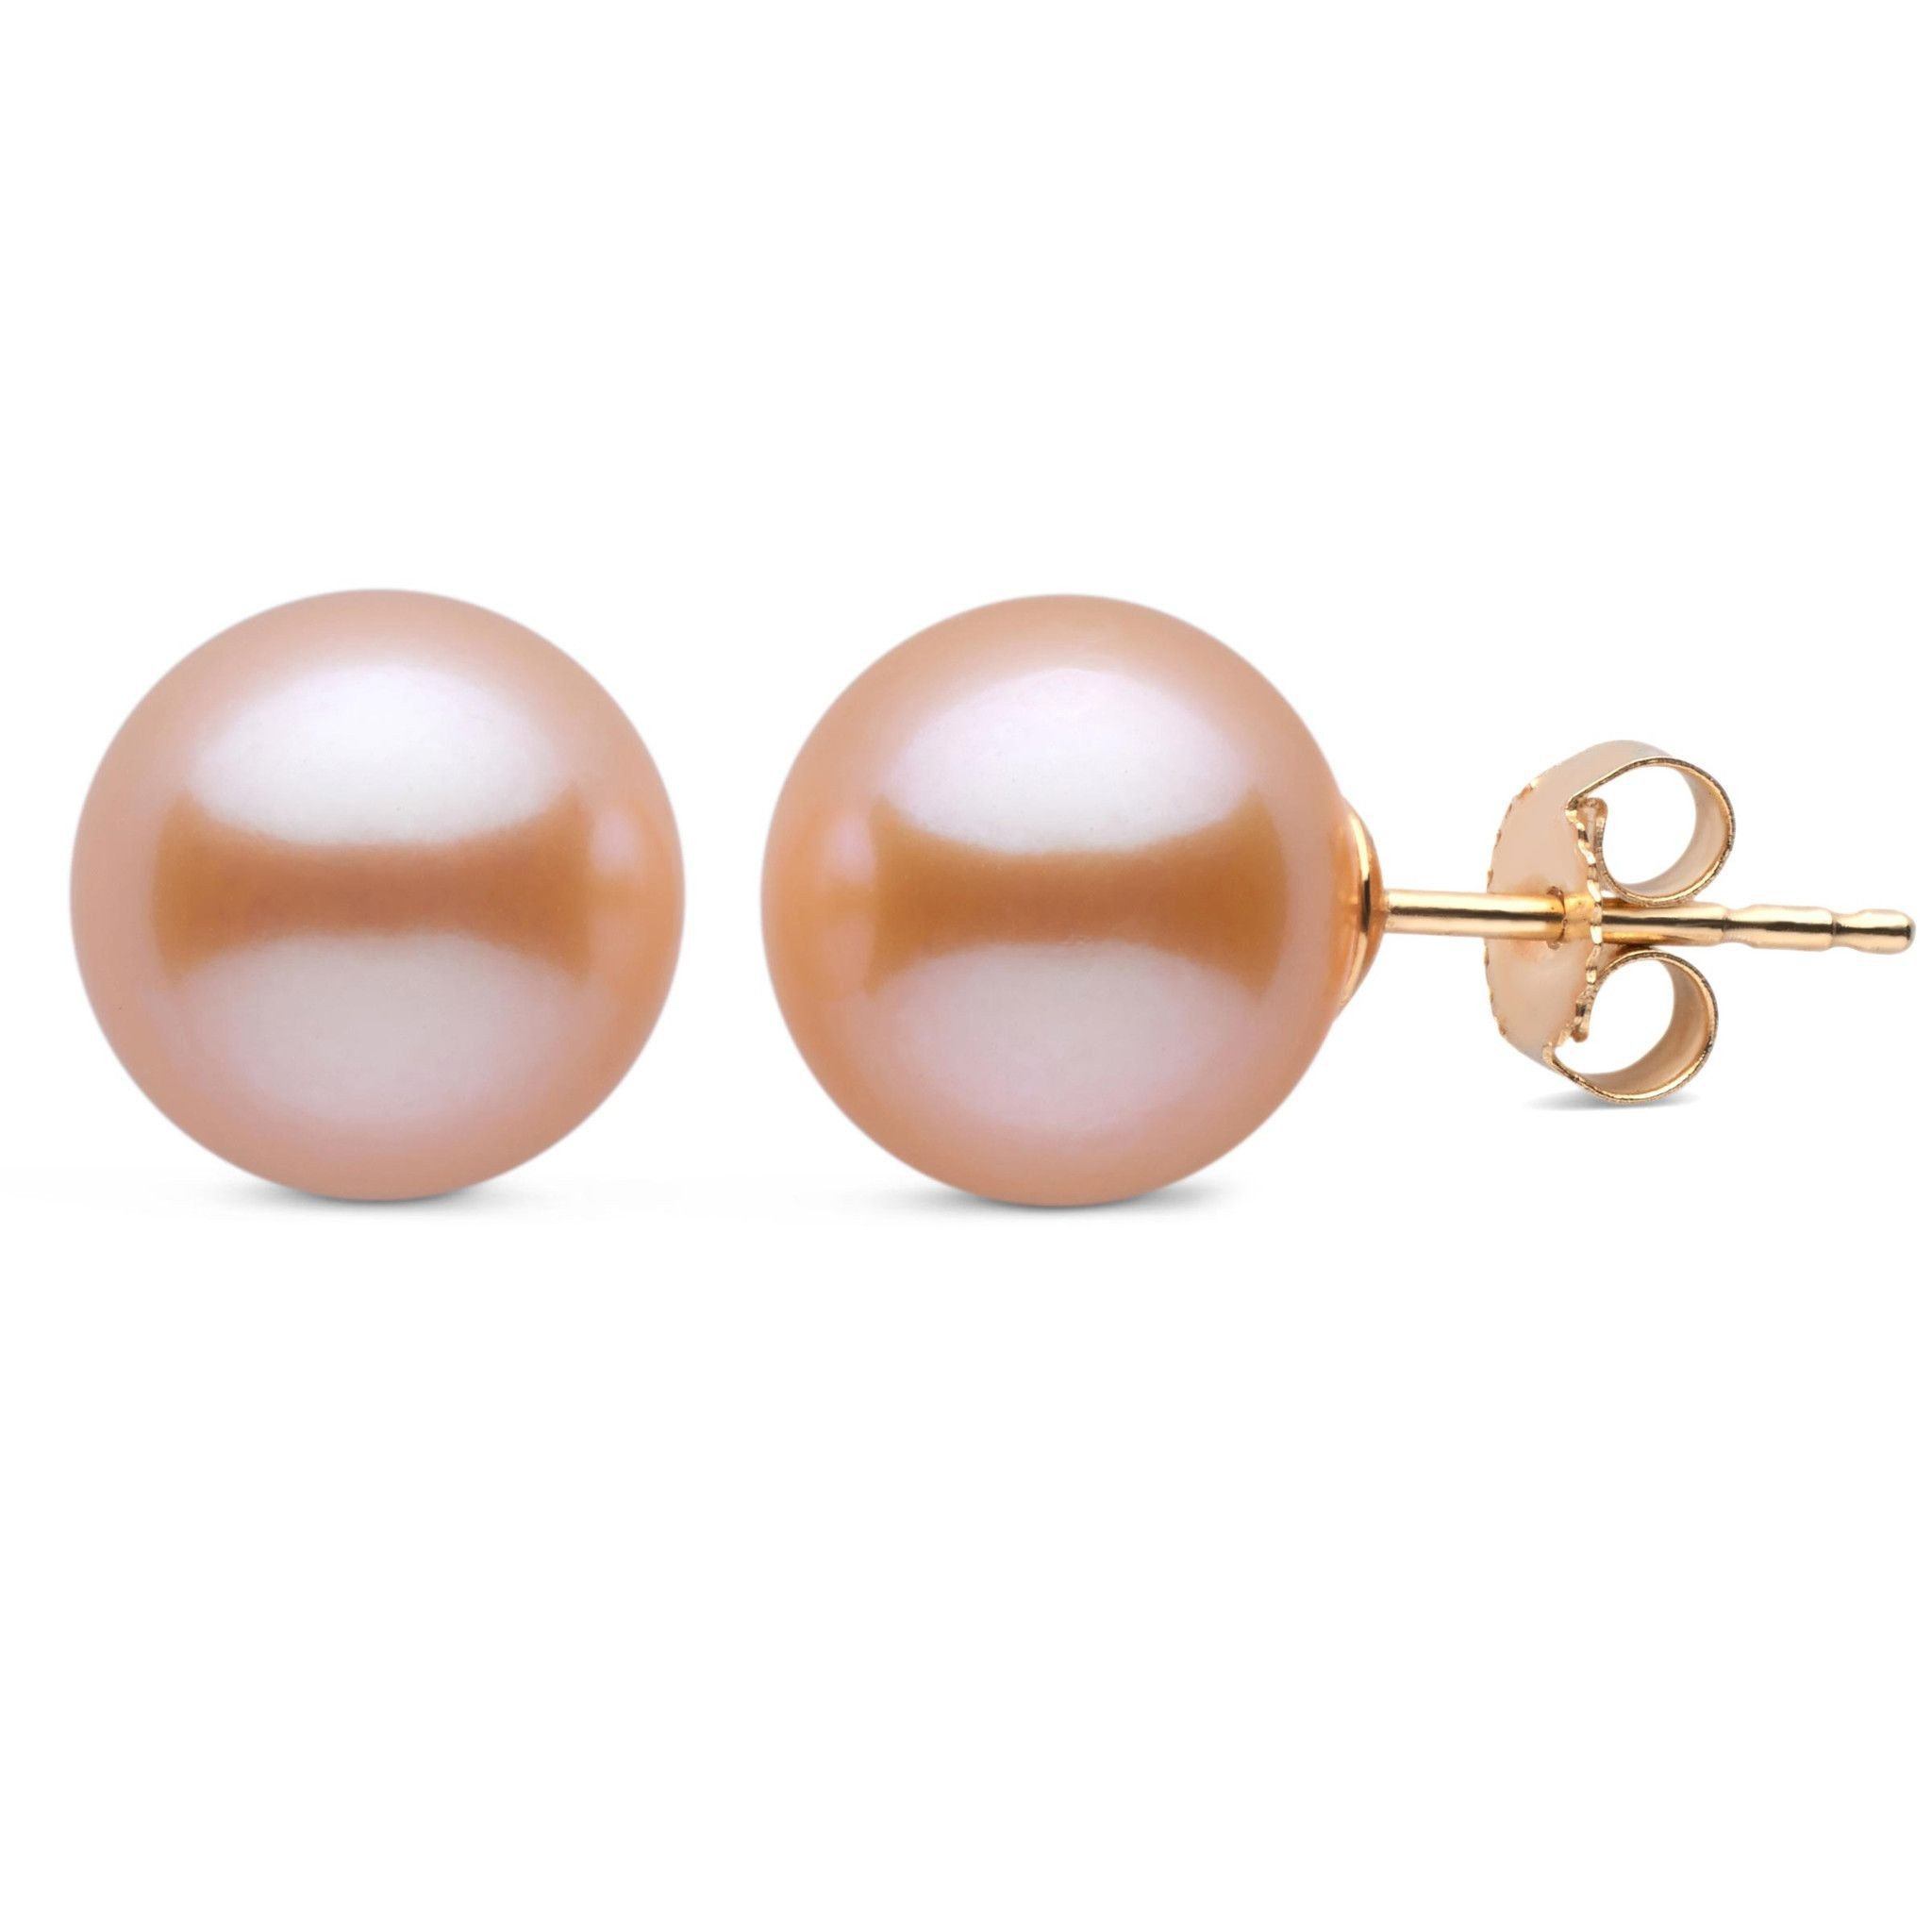 9.0-10.0 mm AAA Pink to Peach Freshwater Pearl Stud Earrings